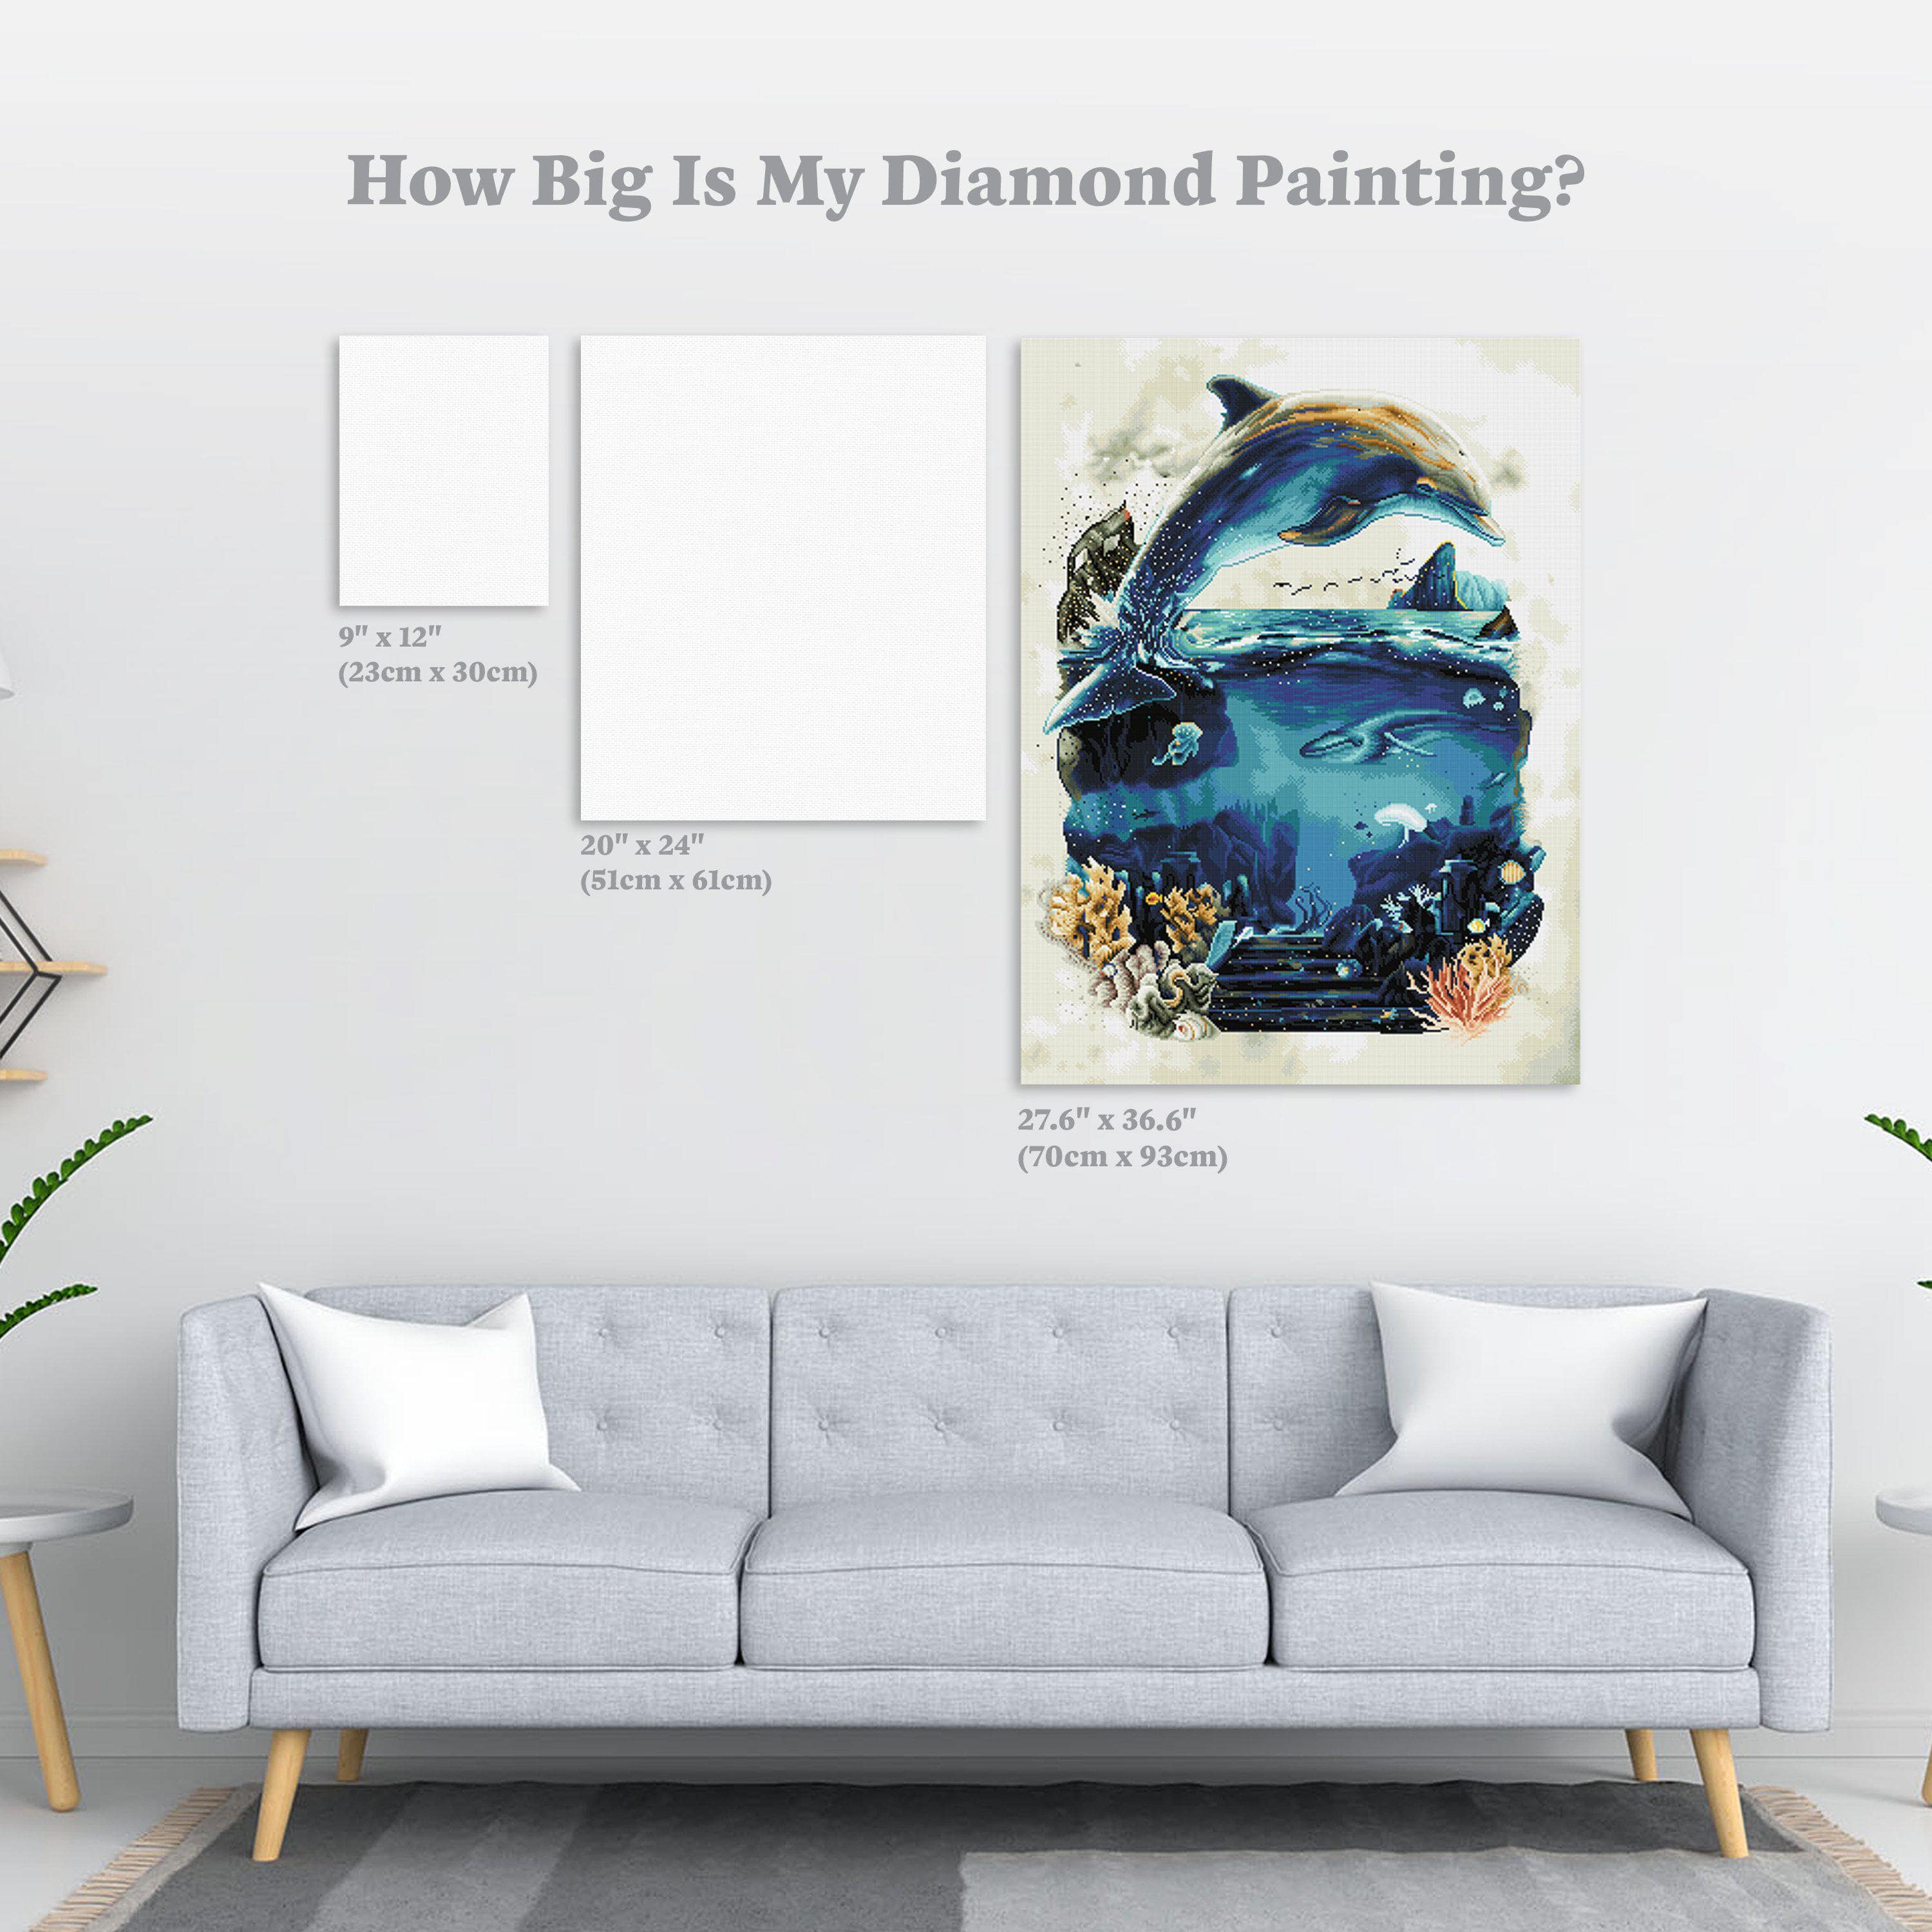 Stormy Ocean Diamond Painting Kit with Free Shipping – 5D Diamond